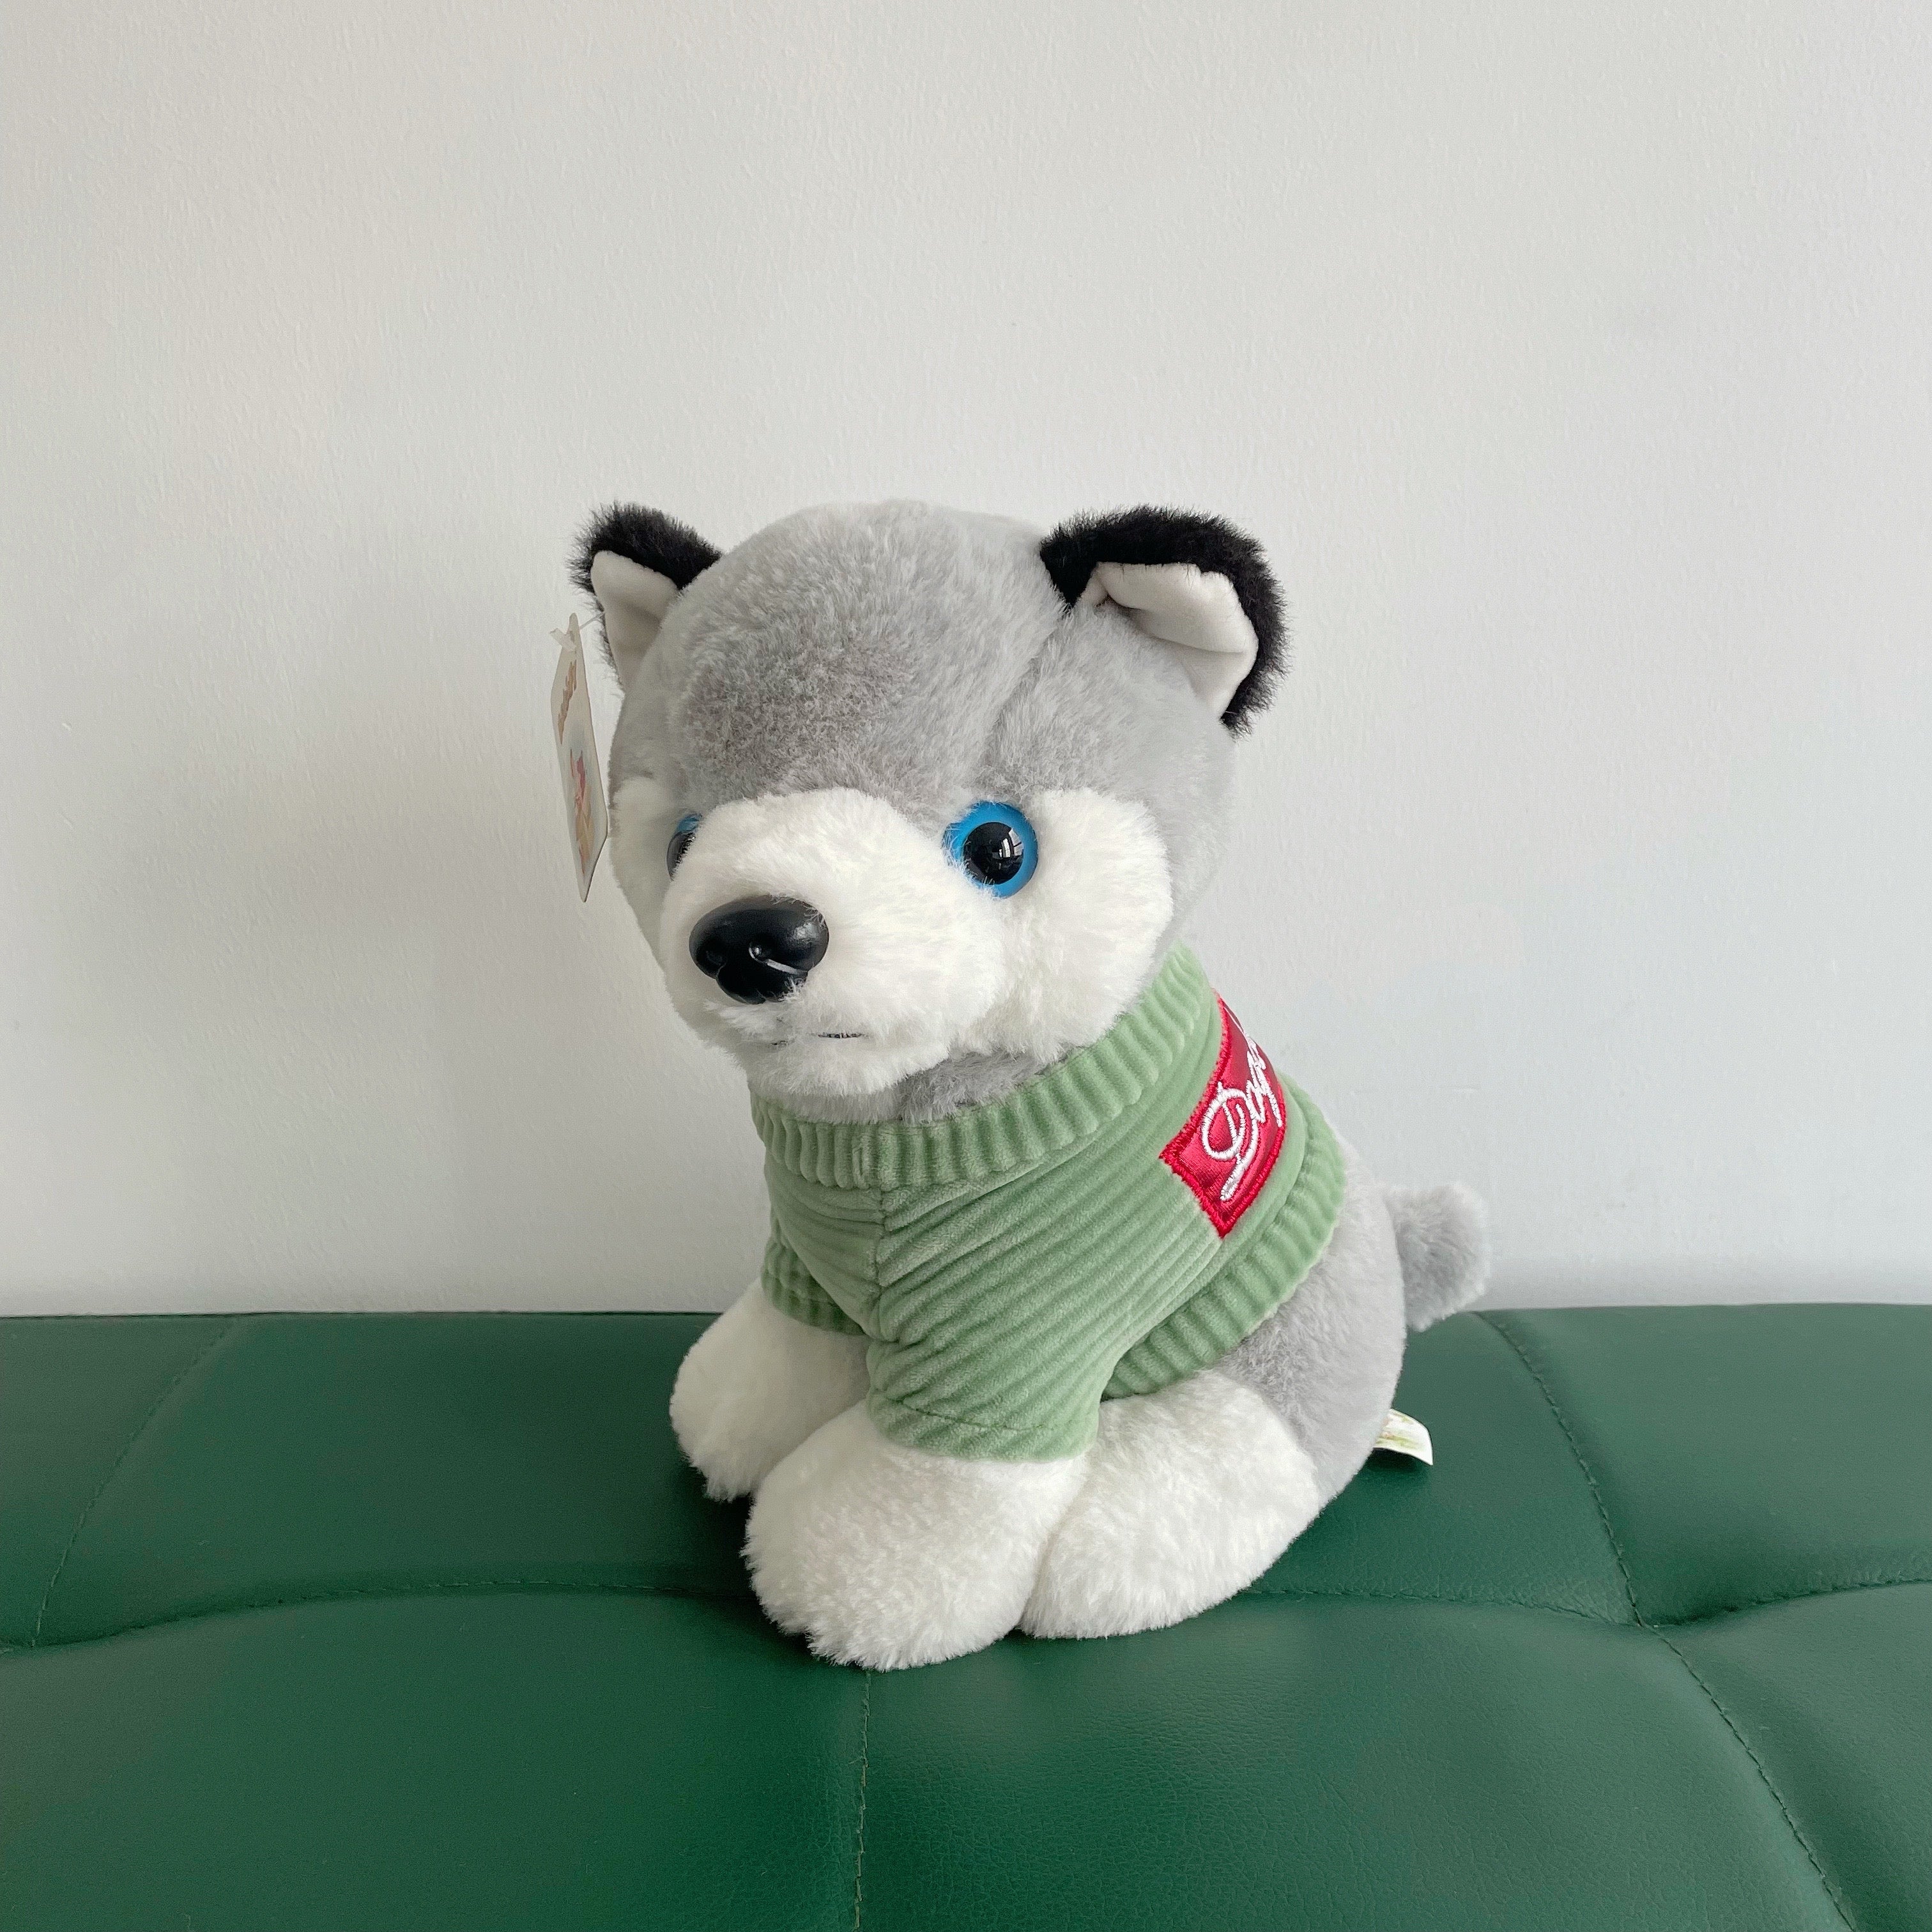 honeyplanet Plush Electronic Husky Dog, Touch Control Plush Puppy Stuffed Animal Dog Toy